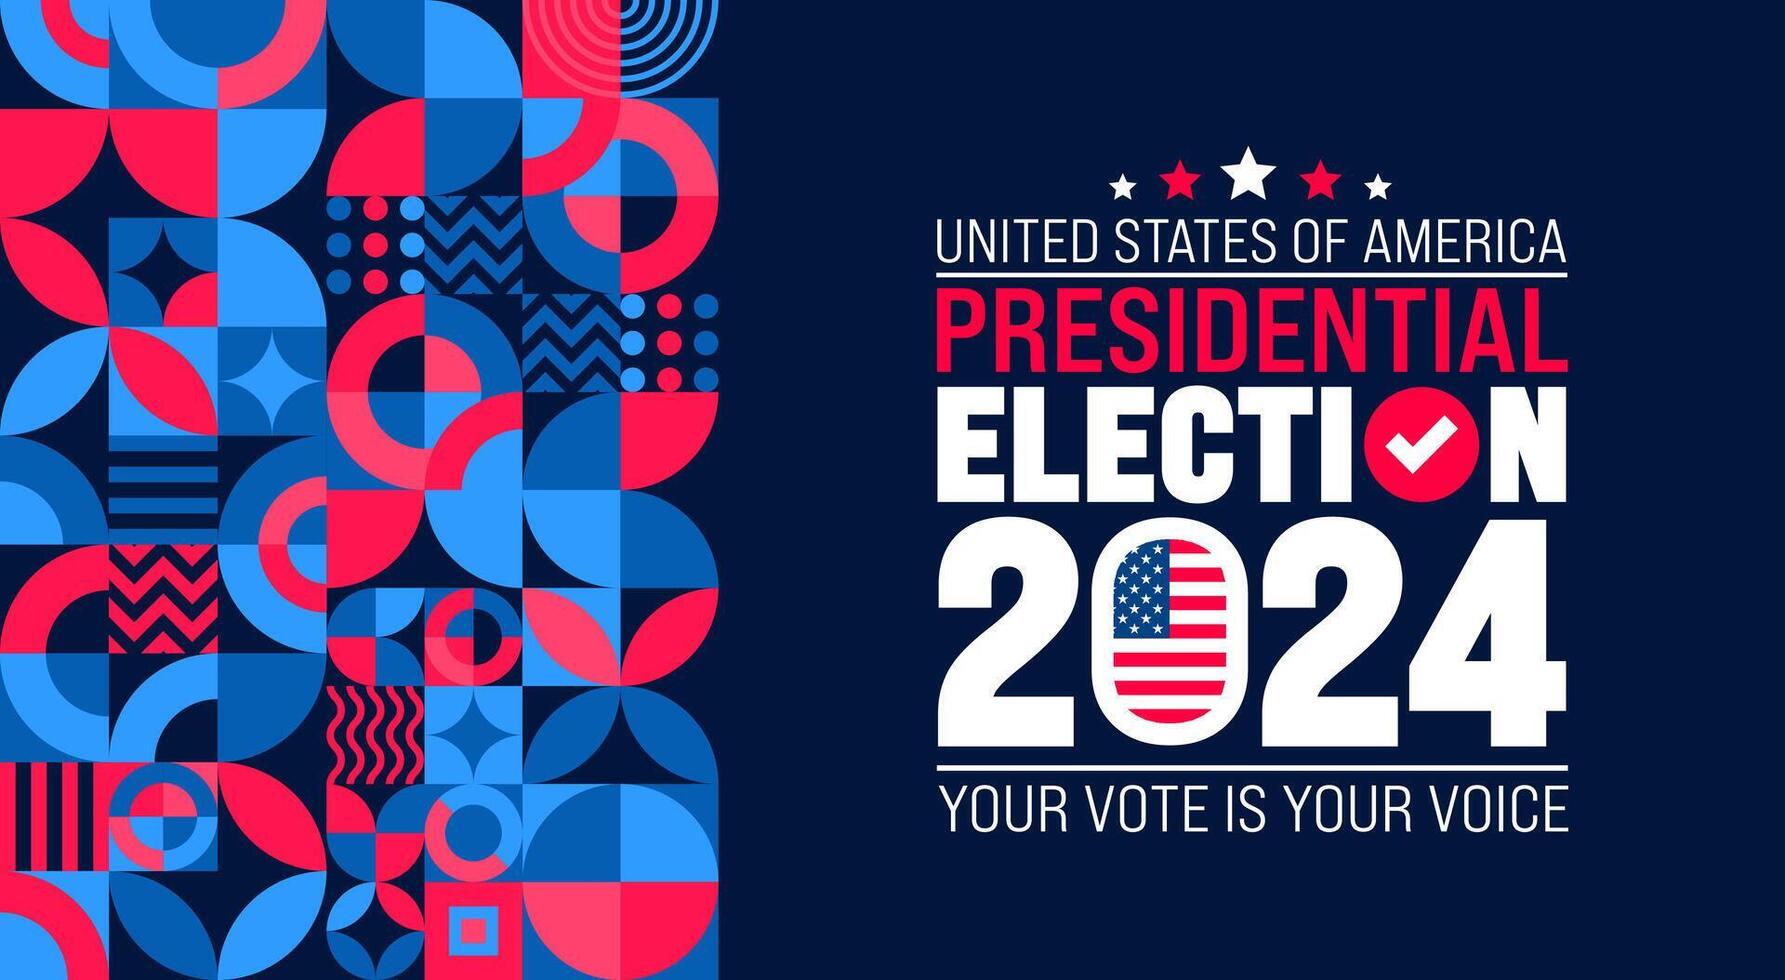 USA Election 2024 background design template. USA flag 2024 presidential election banner design. US presidential election voting poster. November 5 Vote day banner. vector illustration.